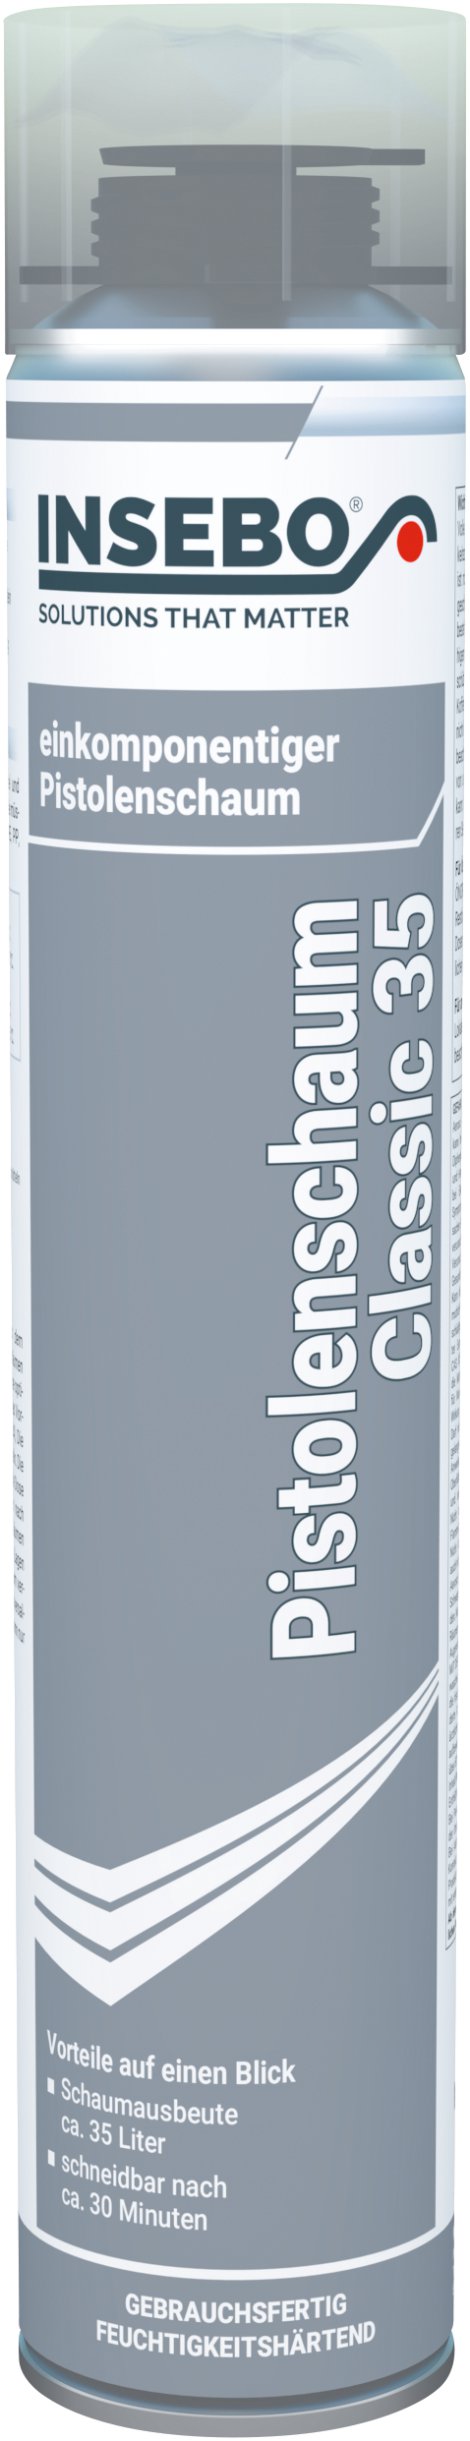 INSEBO® Pistolenschaum Classic 750 ml